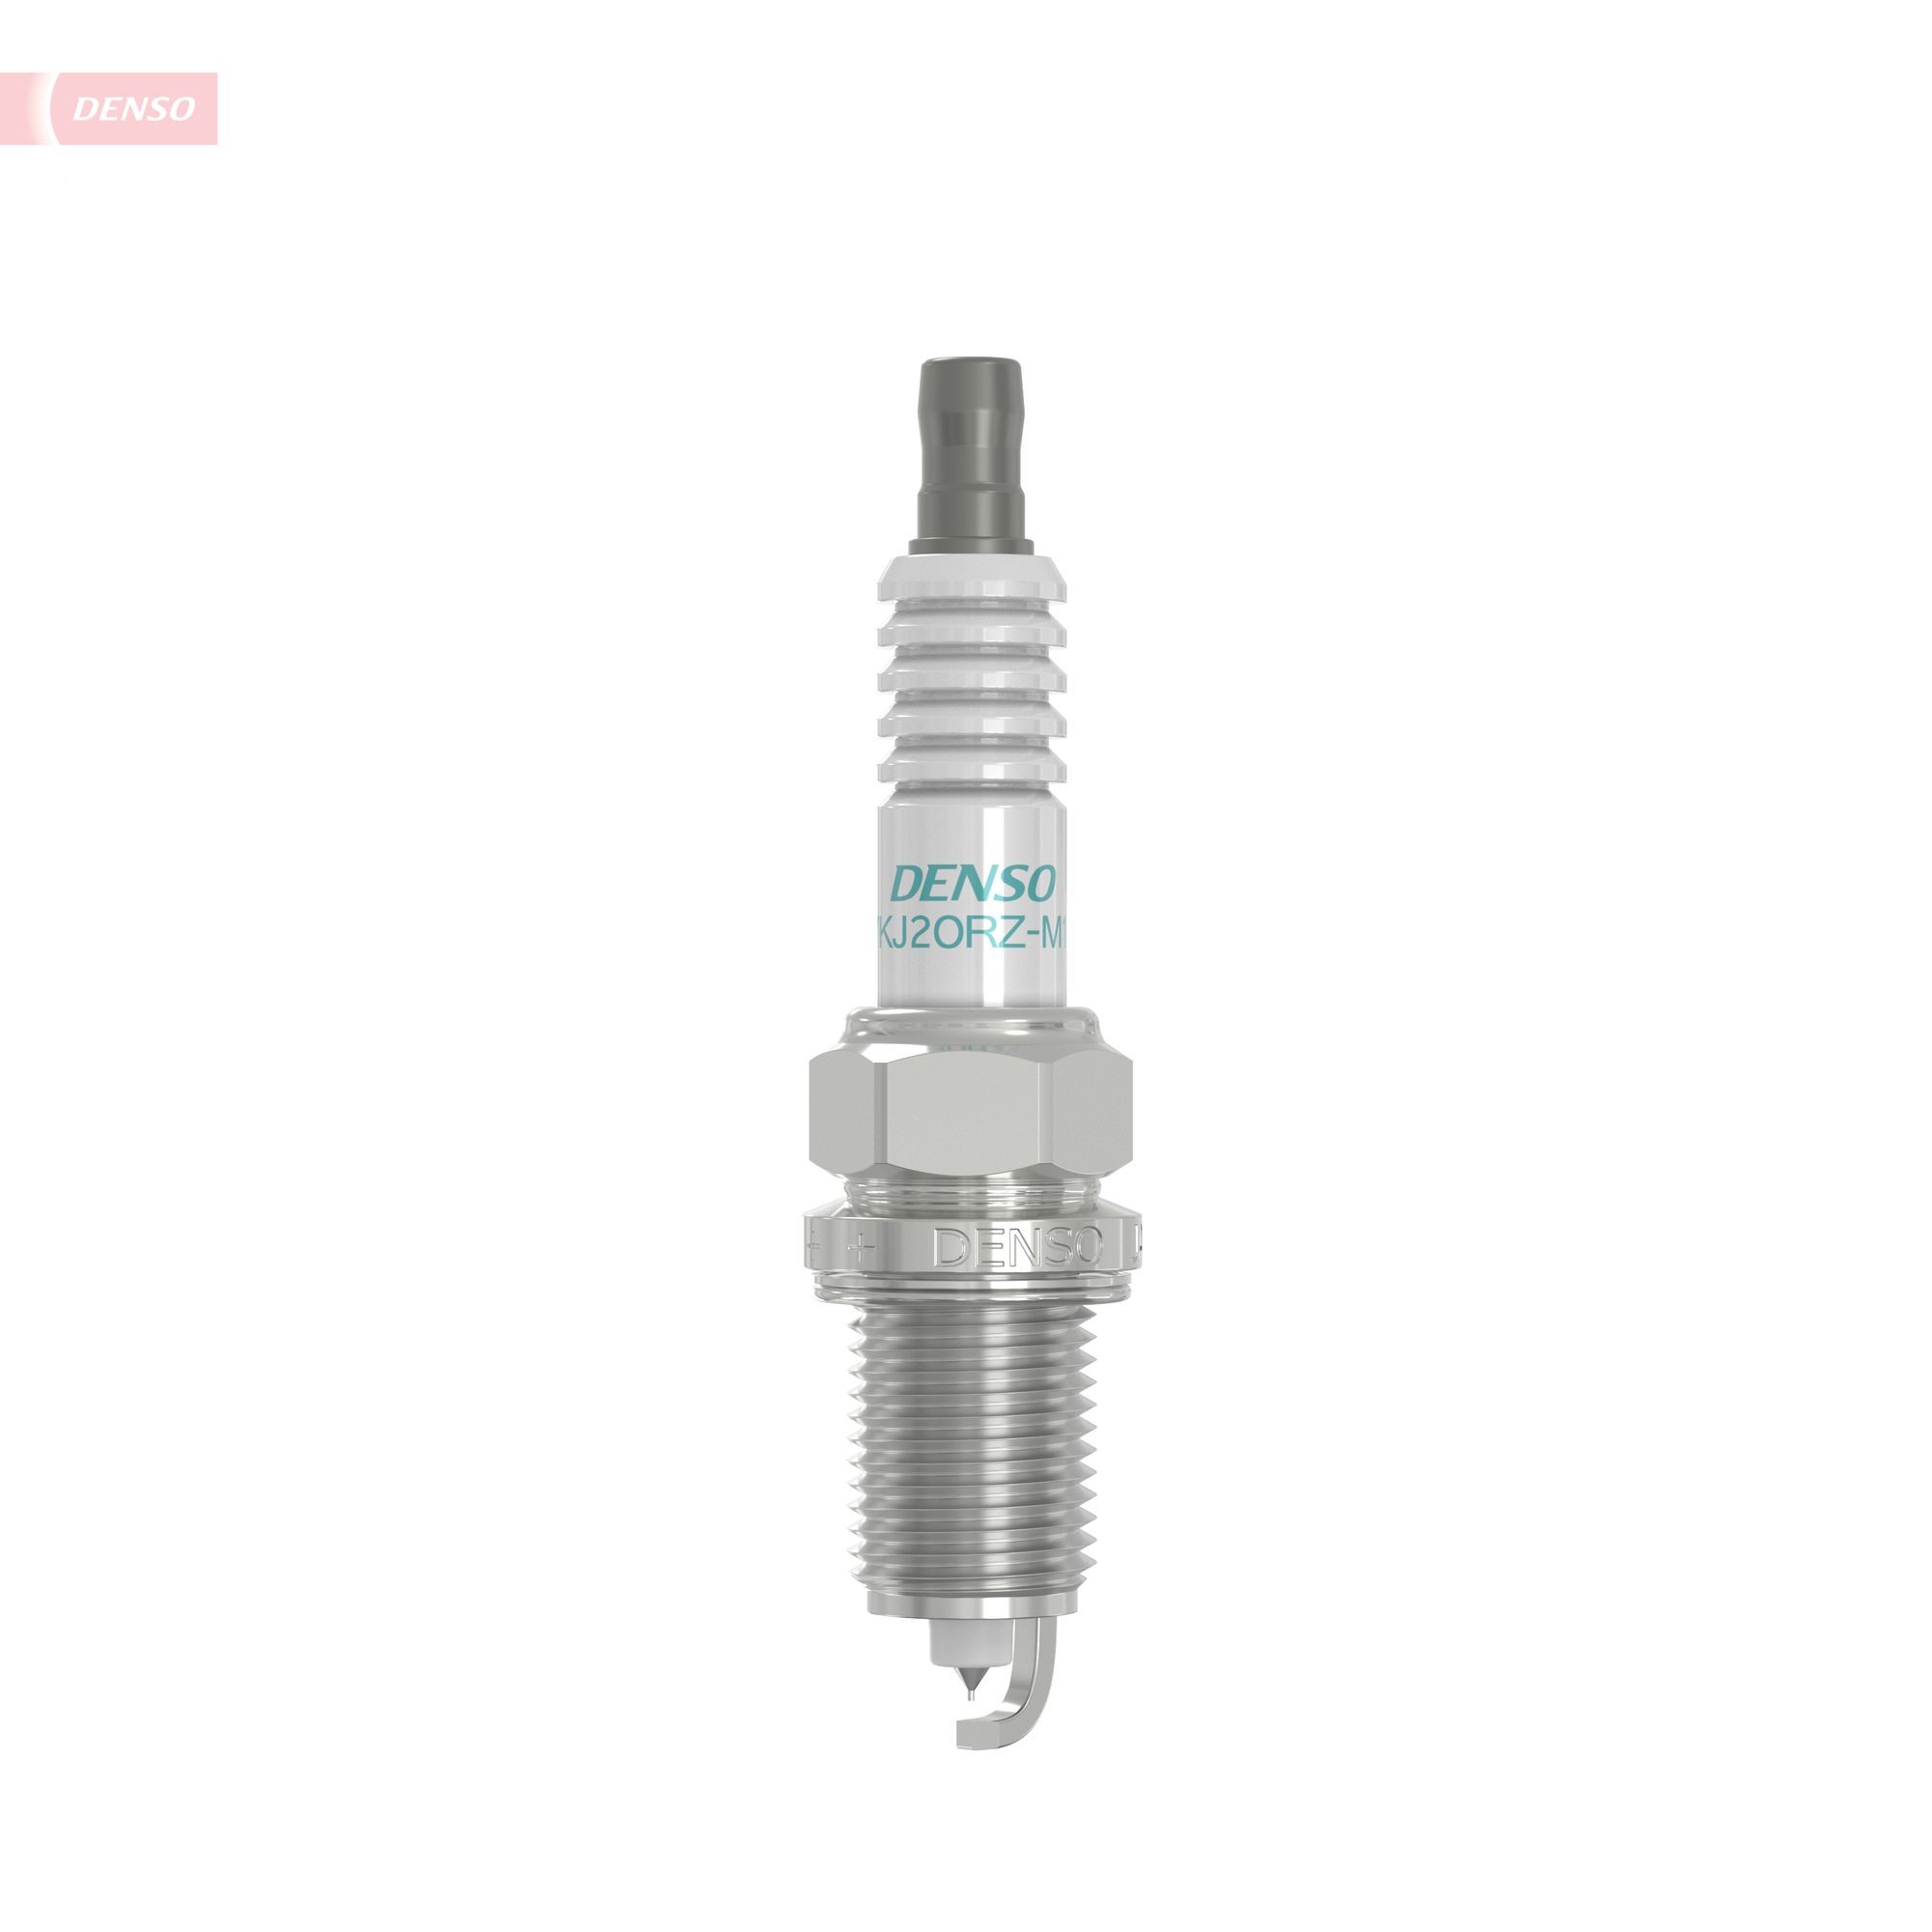 DENSO Iridium Tough VKJ20RZ-M11 Spark plug Spanner Size: 16